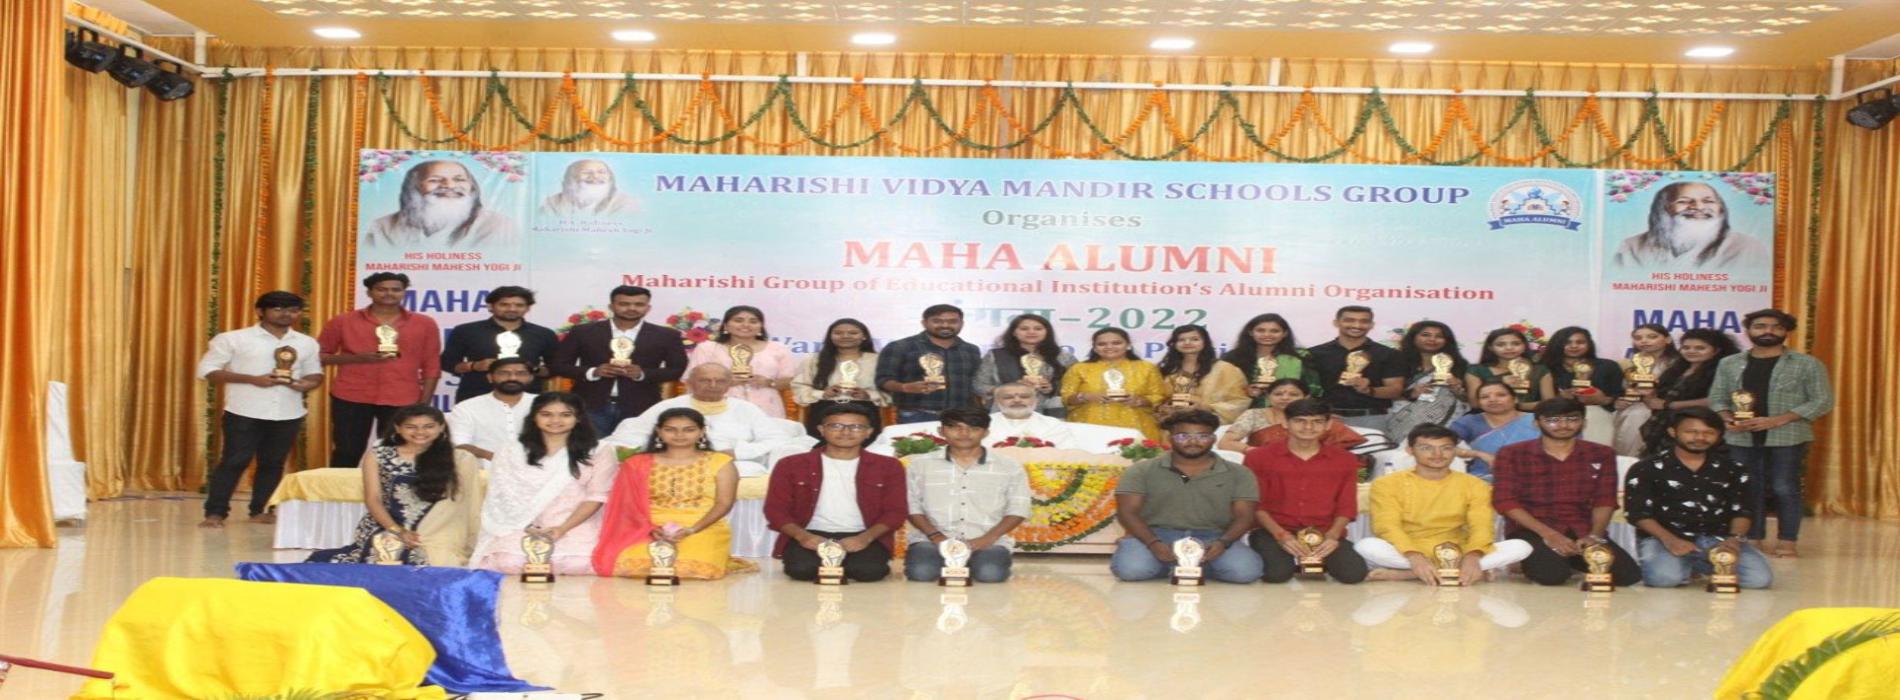 Maha Alumni Assembly of all Institutions (3 branches of Maharishi Vidya Mandir Schools, Maharishi Centre for Educational Excellence and Maharishi Institute of Management) of Maharishi Shiksha Sansthan of Bhopal was organised on 23rd July 2022 at Maharishi Mangalam Bhawan, Hoshangabad Road, Bhopal. 